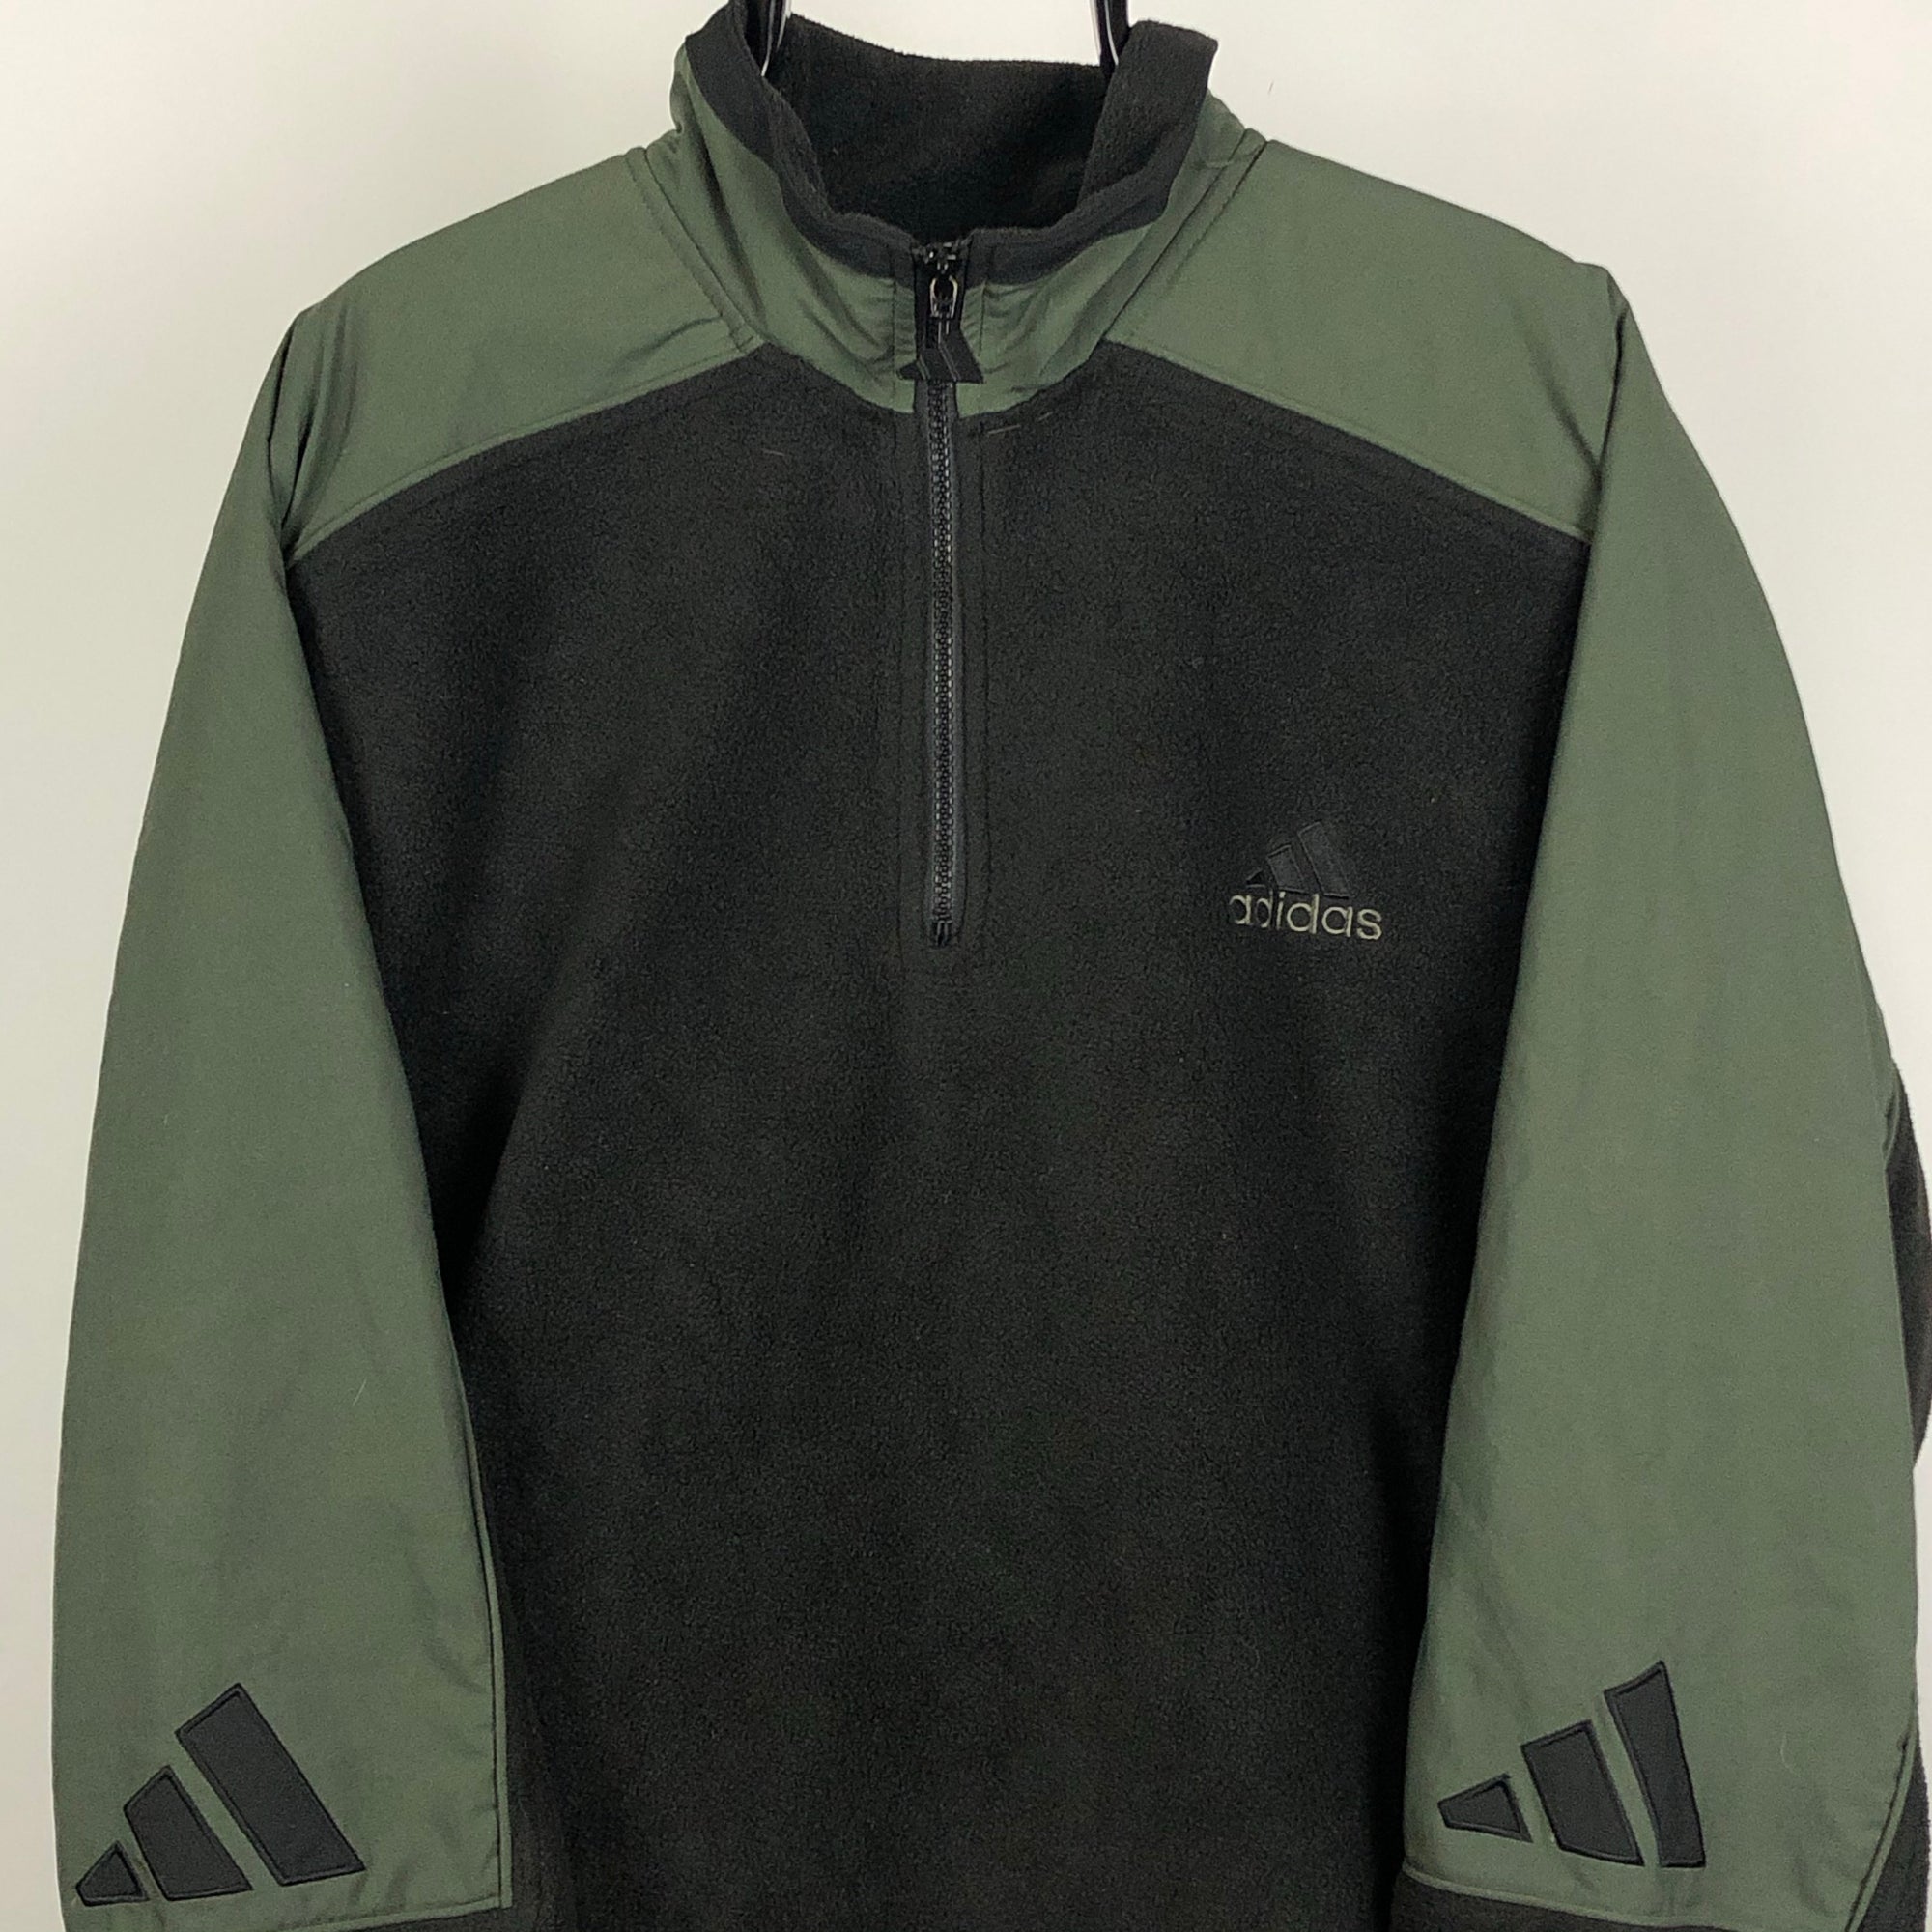 Vintage Adidas Fleece in Black & Forest Green - Men’s XL/Women’s XXL